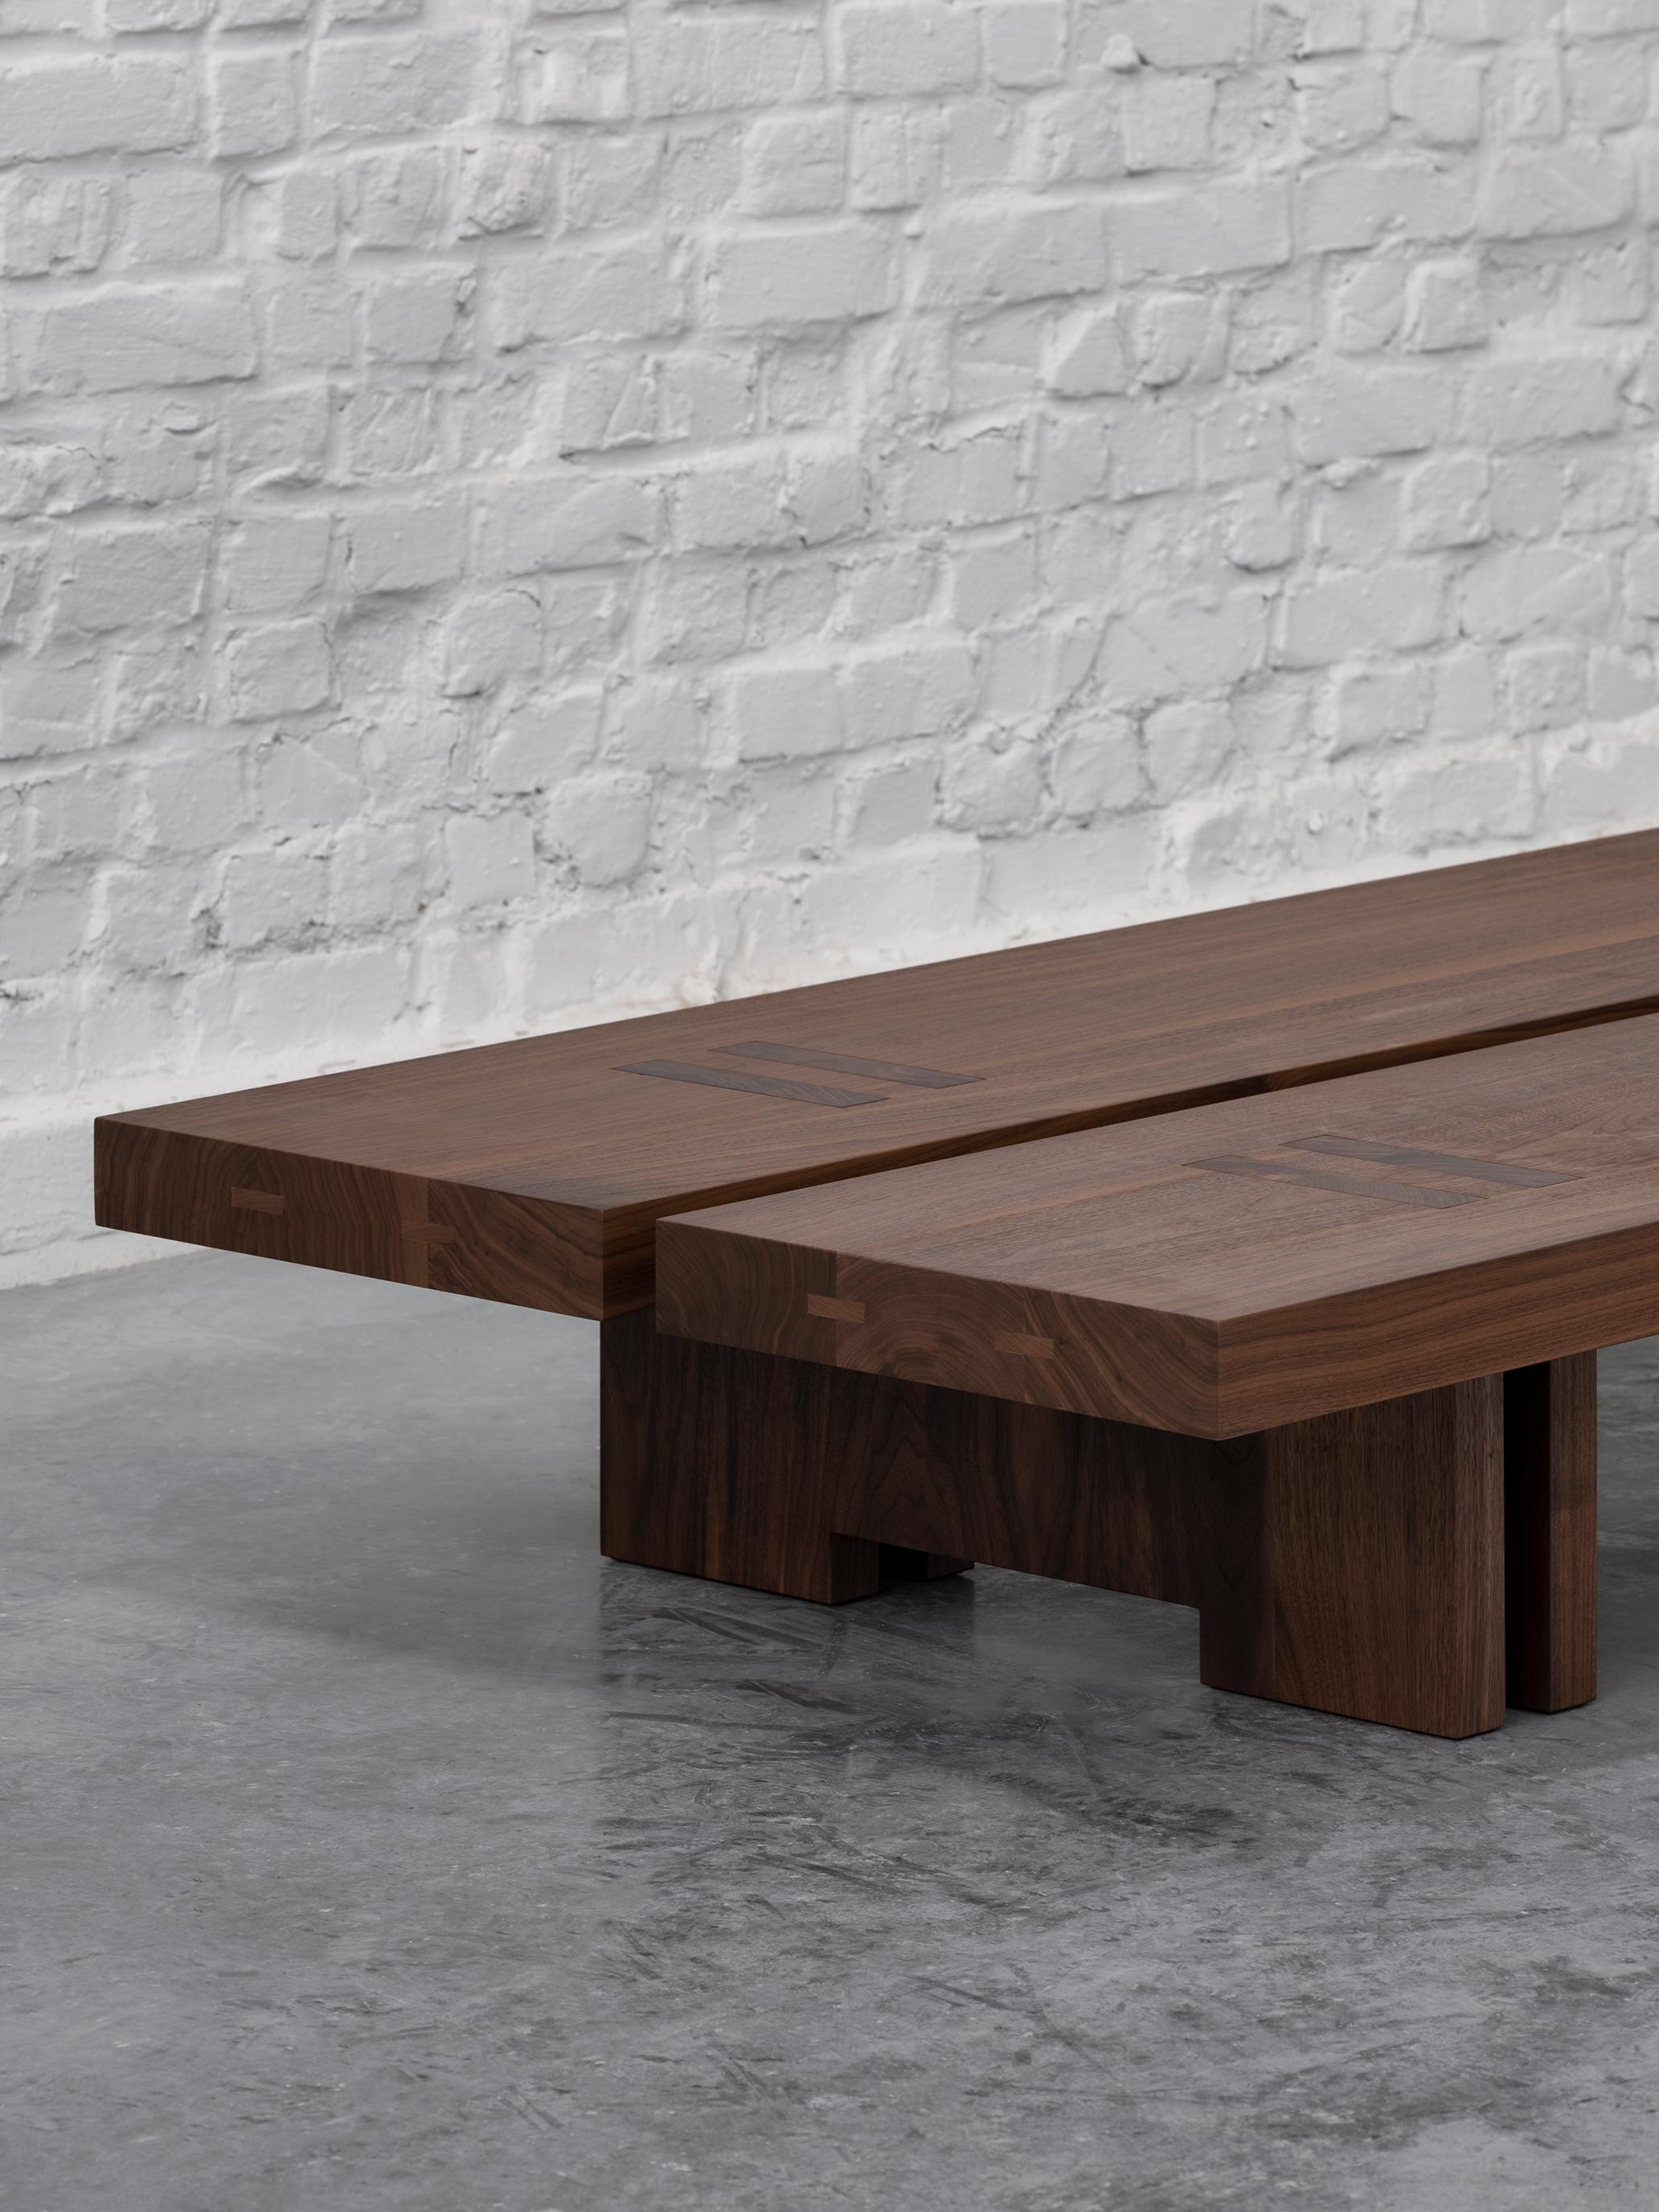 Belgian Rift Wood Coffee Table by Andy Kerstens